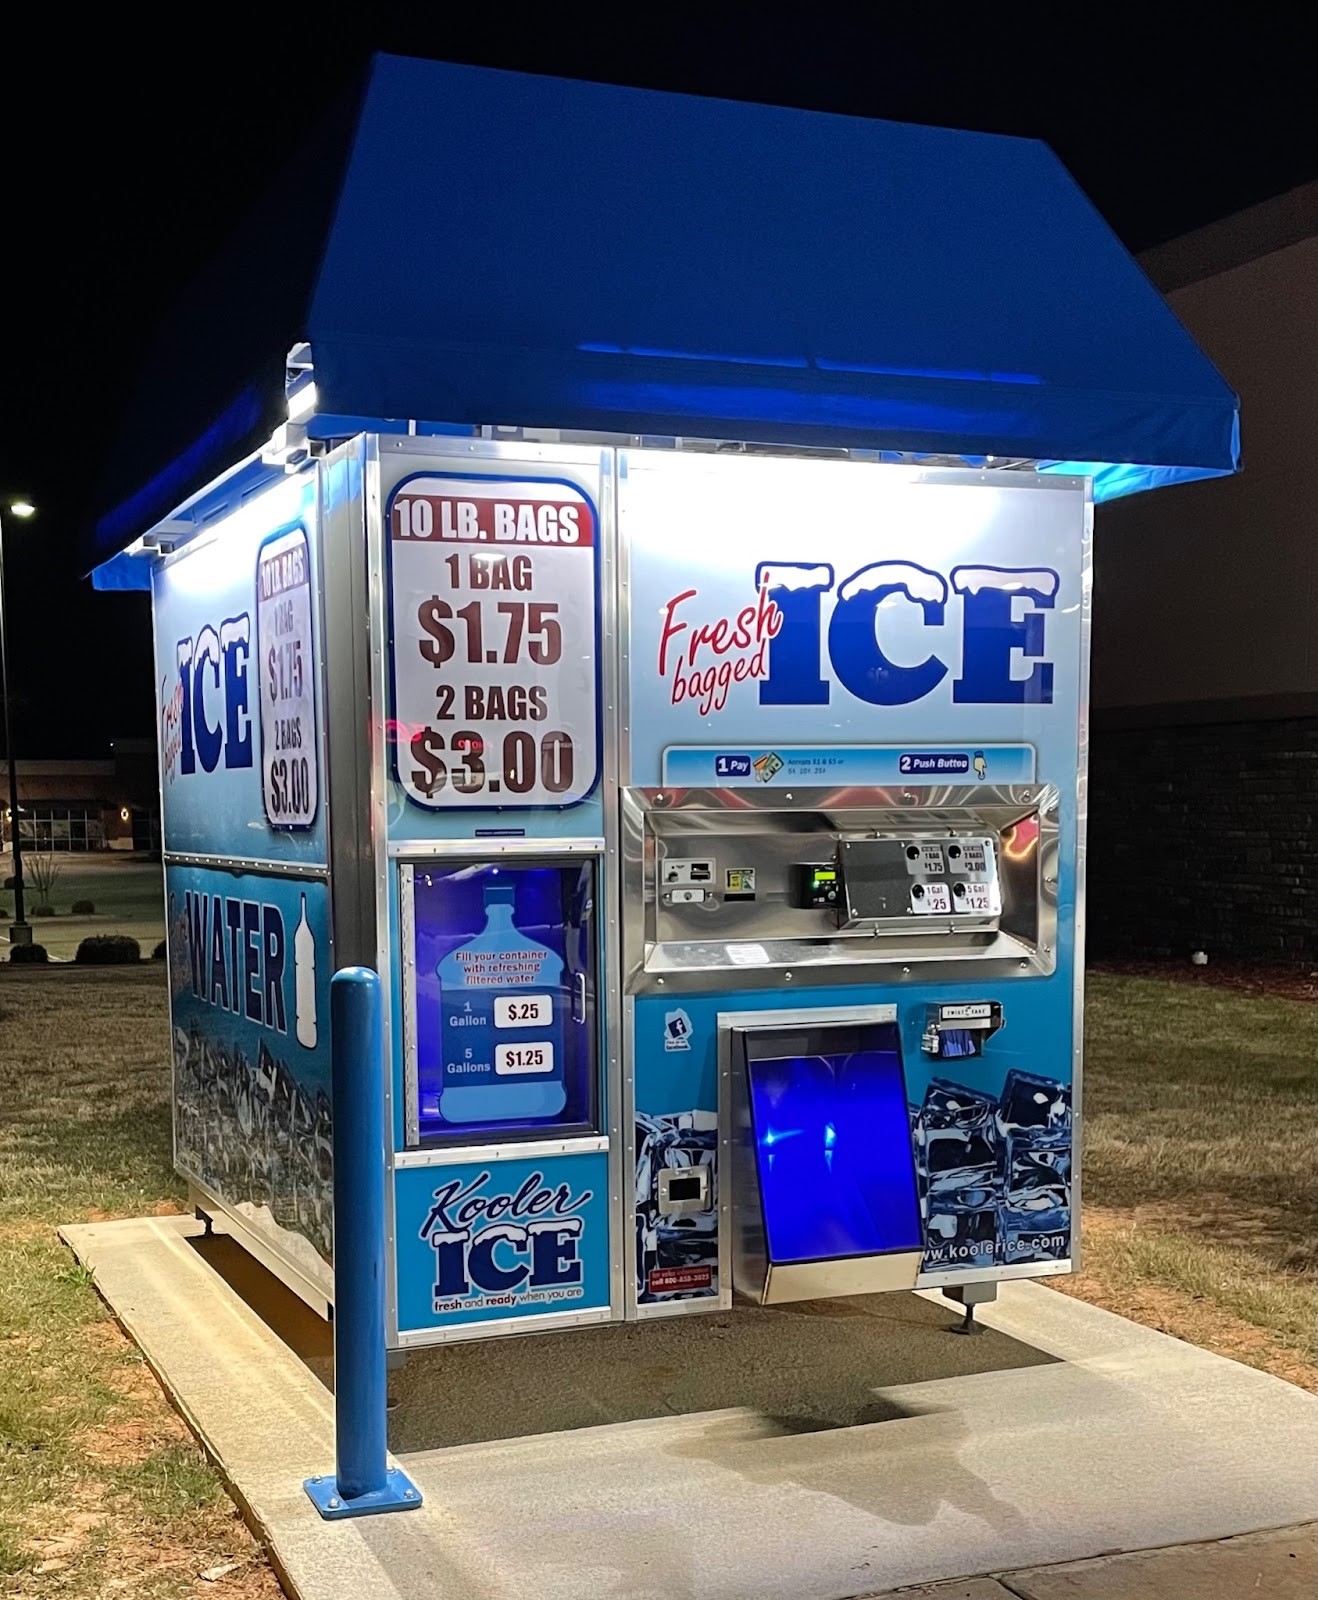 Kooler Ice Vending Machine IM1500 at night with LED lights